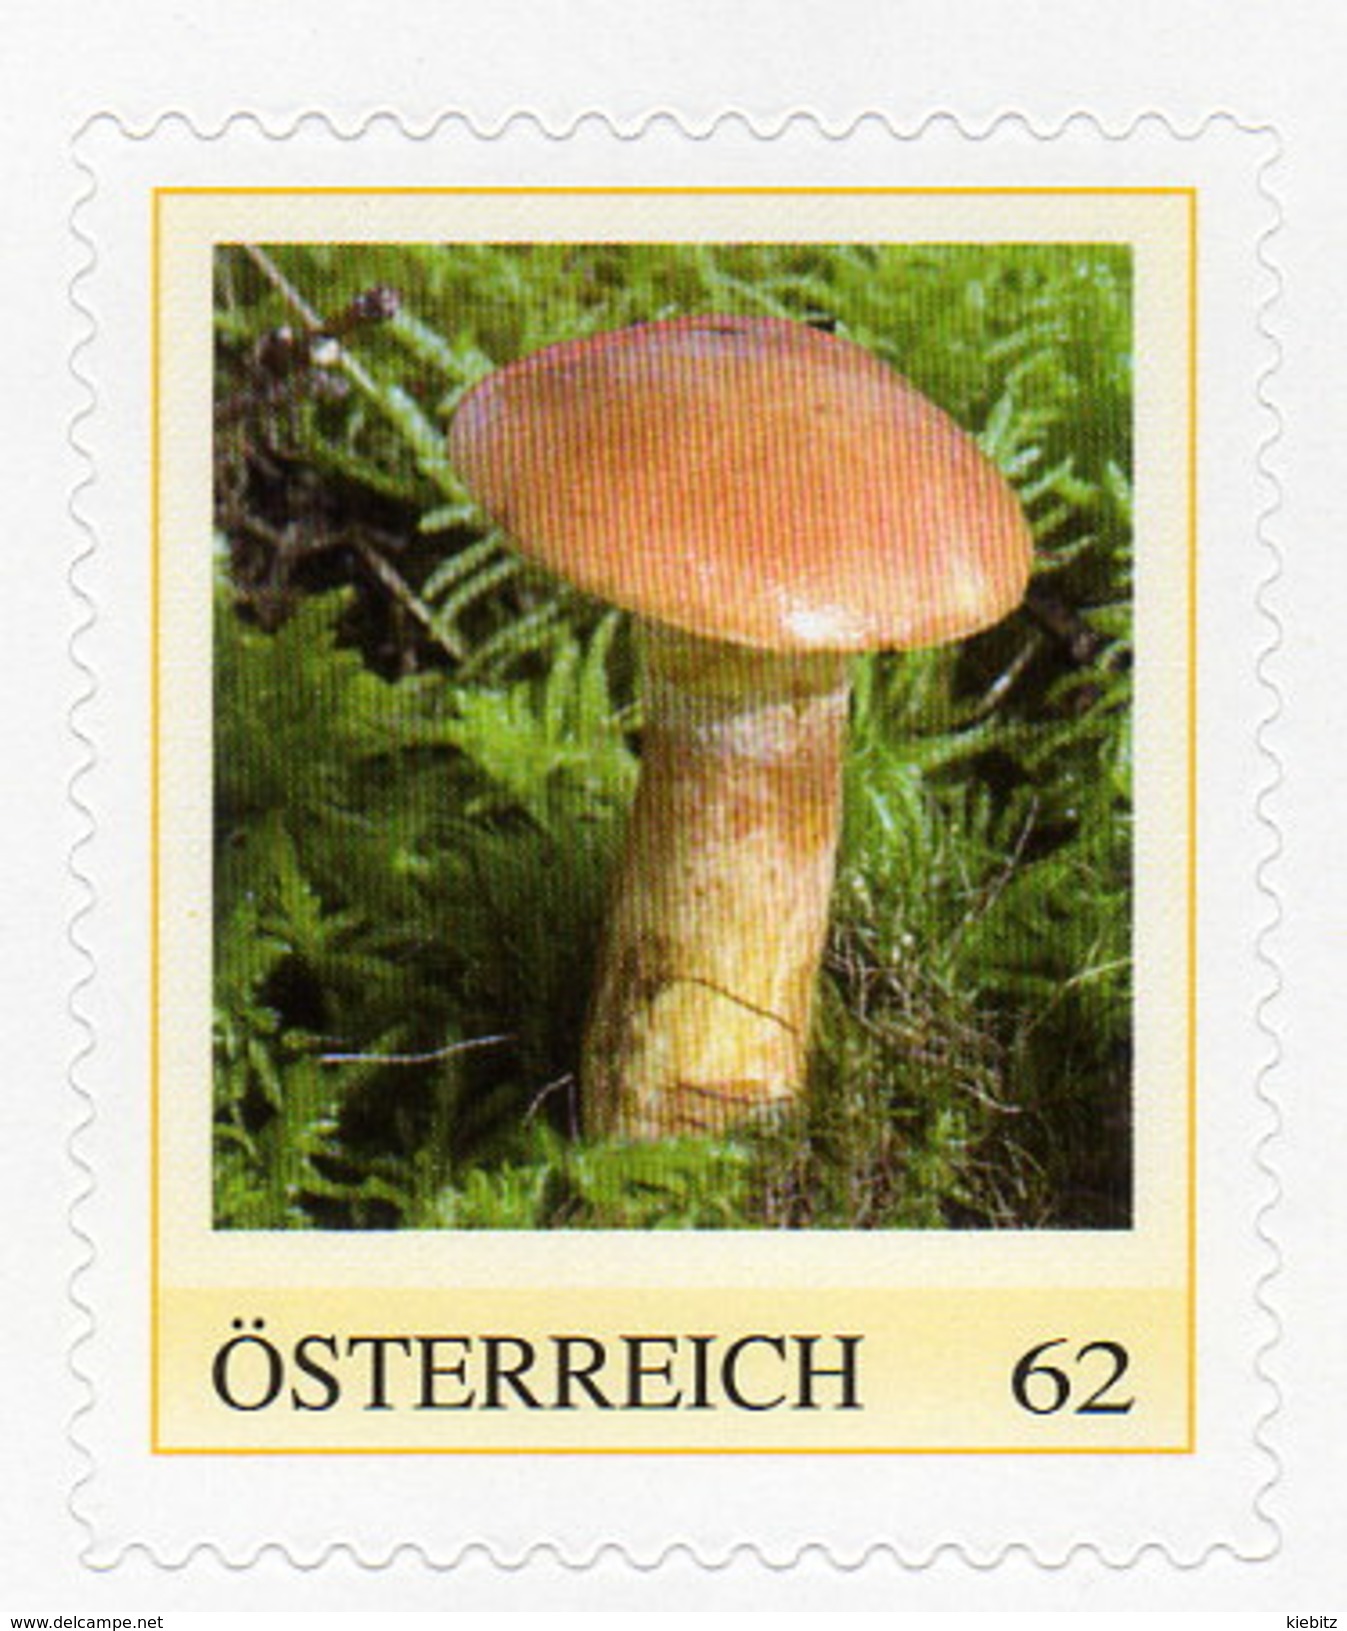 ÖSTERREICH 2011 ** Goldröhrling / Suillus Grevillei - PM Personalized Stamp MNH - Pilze